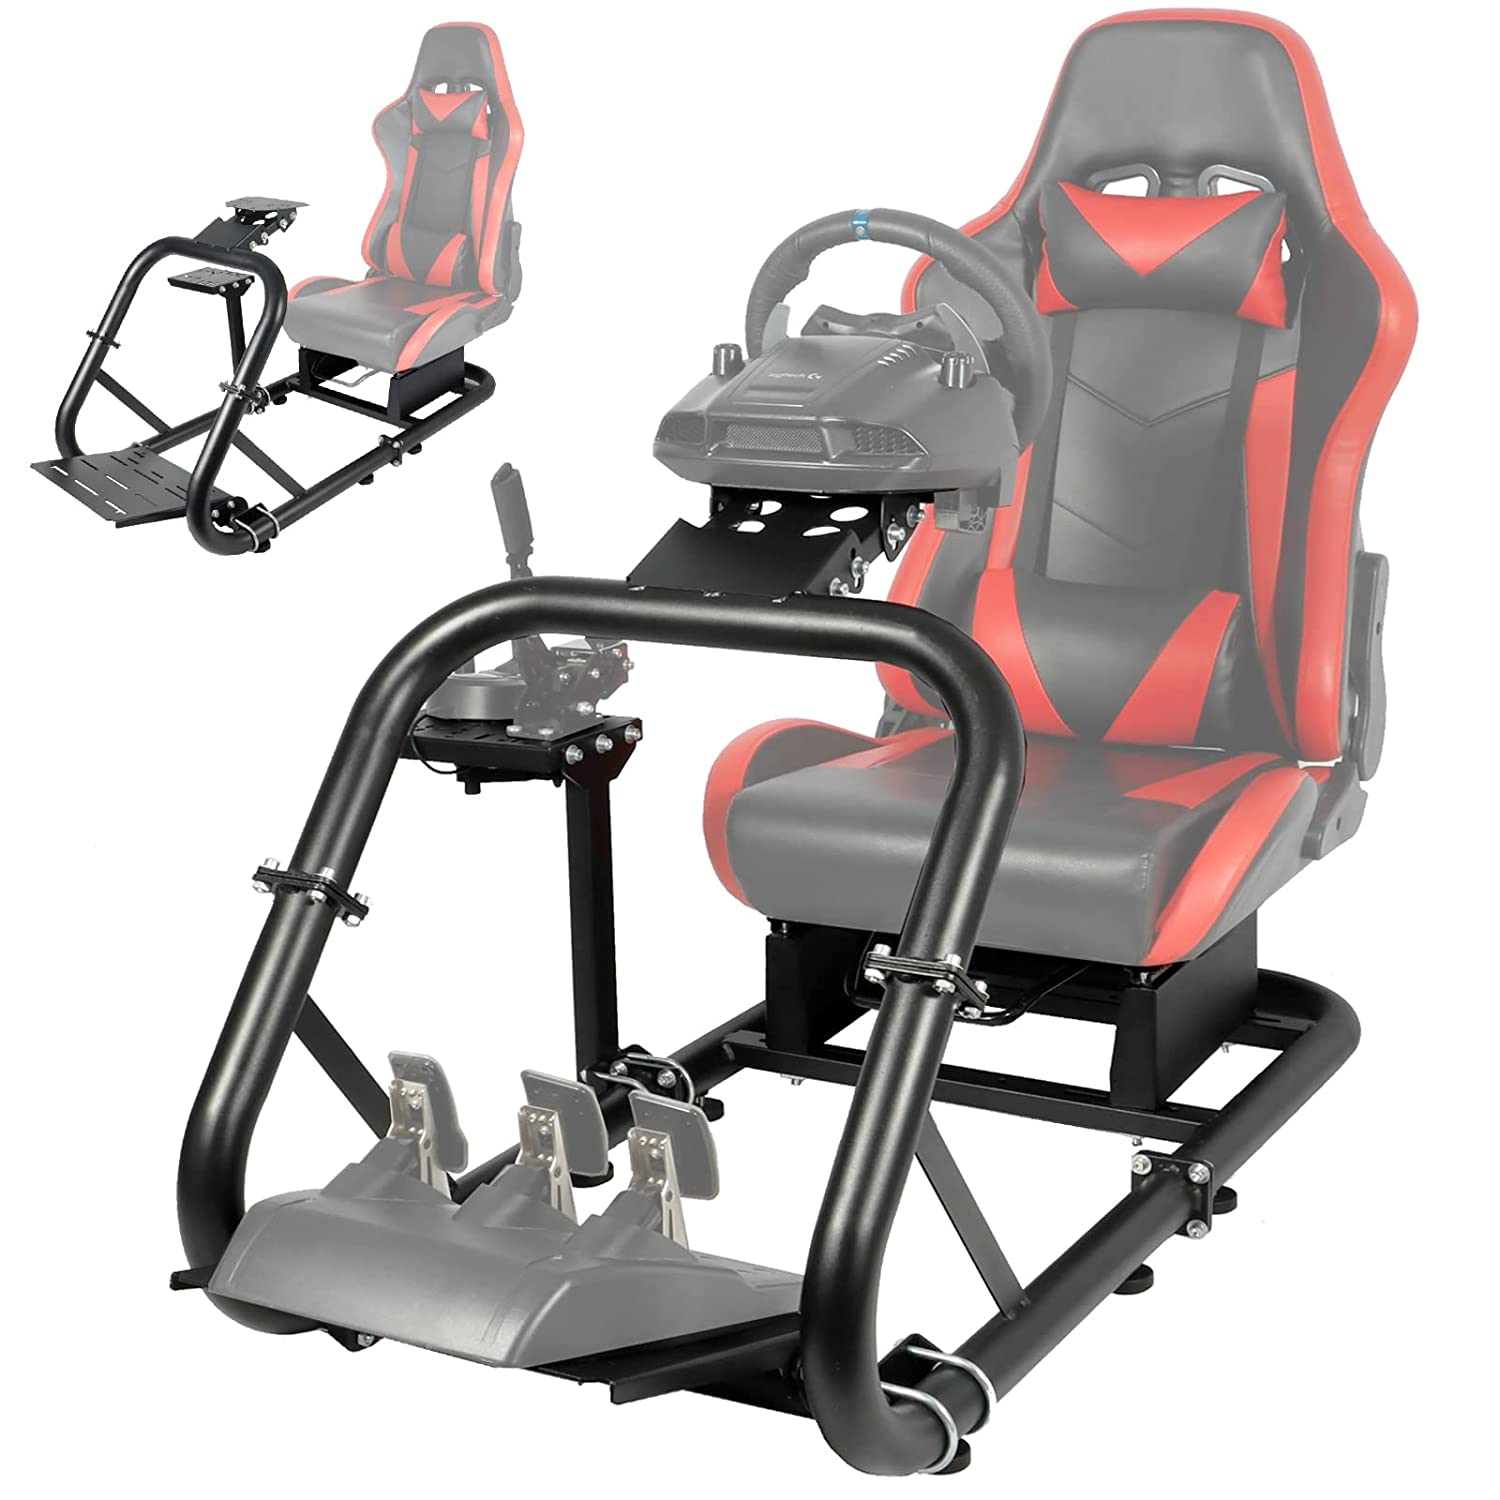  Extreme Sim Racing Wheel Stand Cockpit SGT Racing Simulator -  Nardo Gray Edition For Logitech G25, G27, G29, G920, G923 Thrustmaster and  Fanatec - WHEEL LOCKS INCLUDED (Nardo Gray) : Video Games